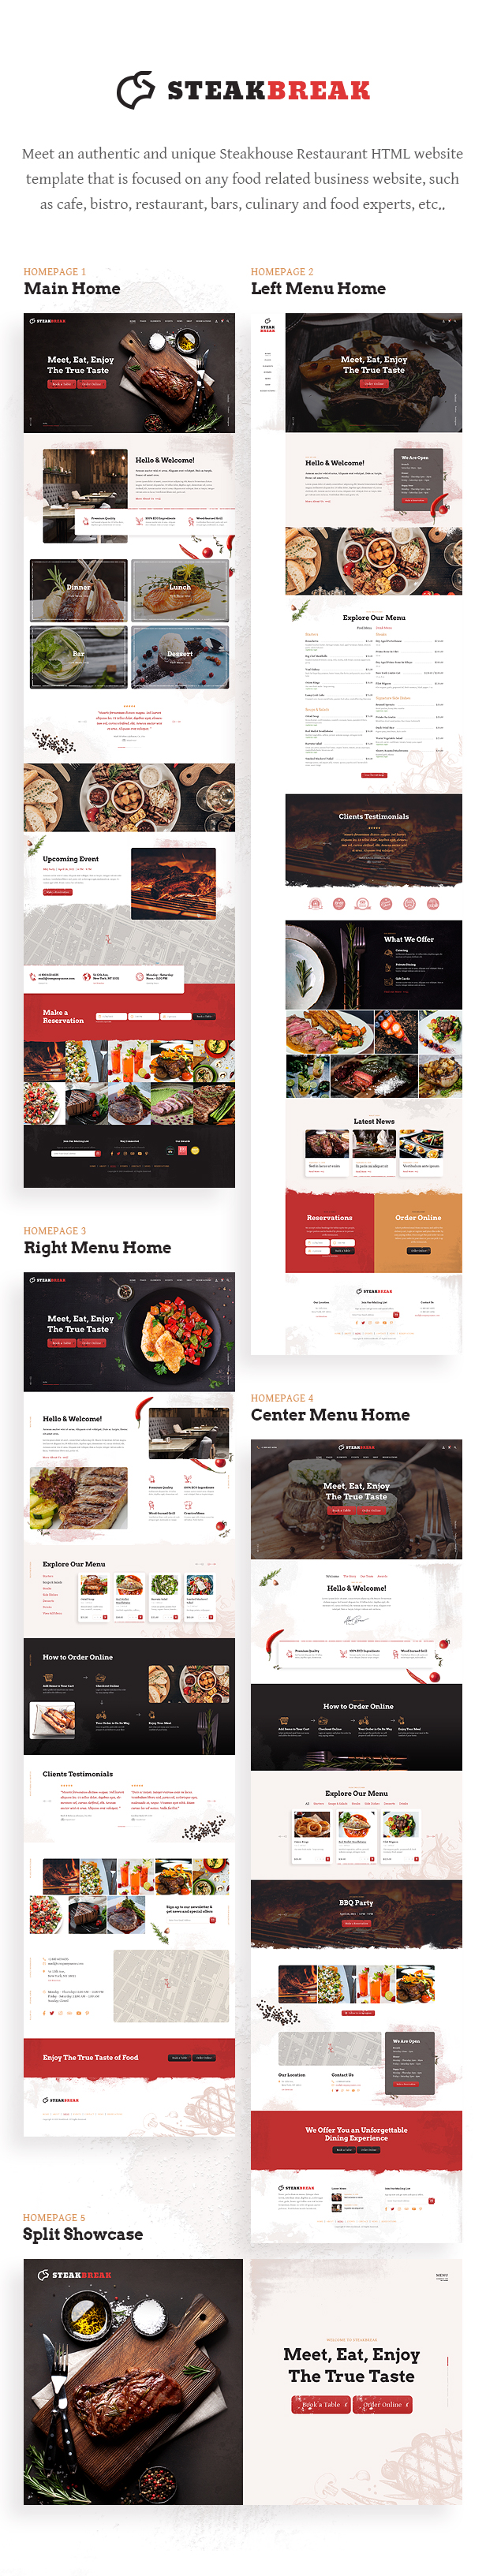 SteakBreak - Restaurant HTML Template - 1